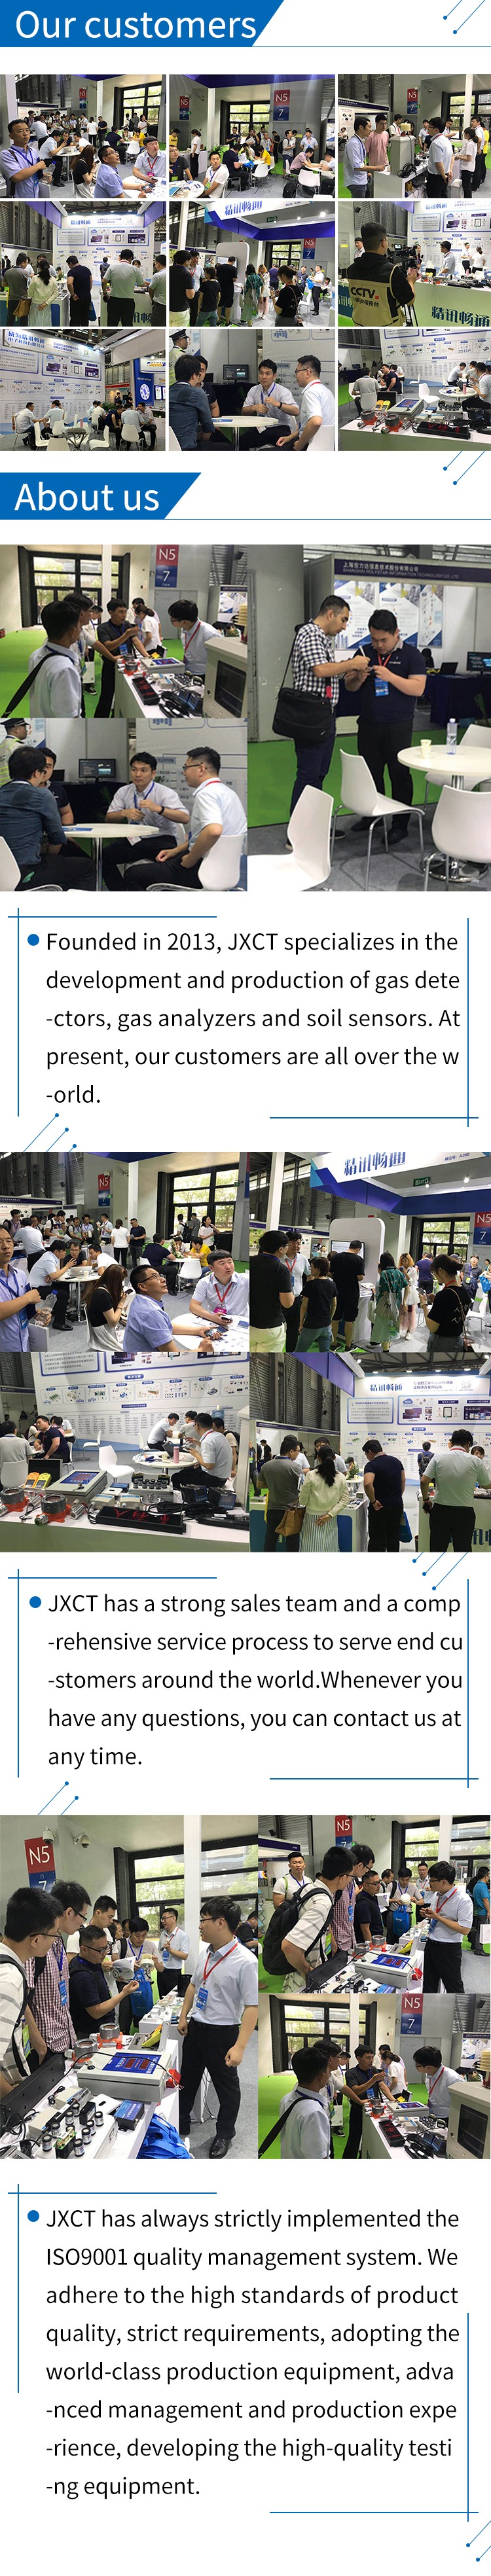 Weihai precision - open electronic technology co., LTD